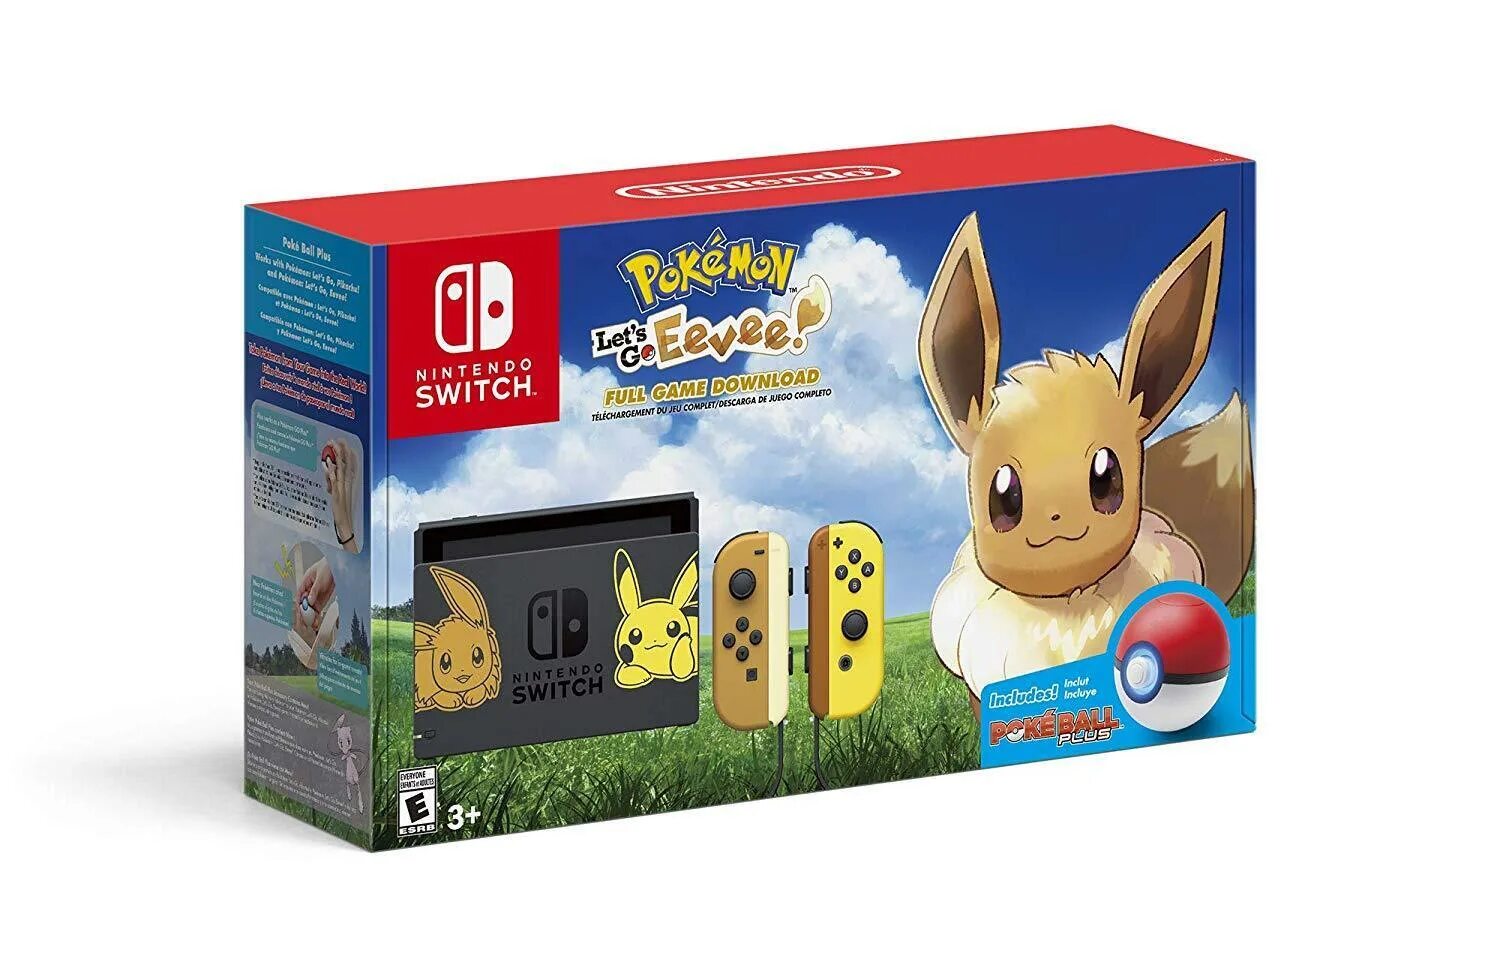 Покемоны на свитч. Nintendo Switch Pikachu Eevee Edition. Нинтендо свитч покемон. Nintendo Switch Pokemon Edition. Let's go Eevee Nintendo Switch Bundle.